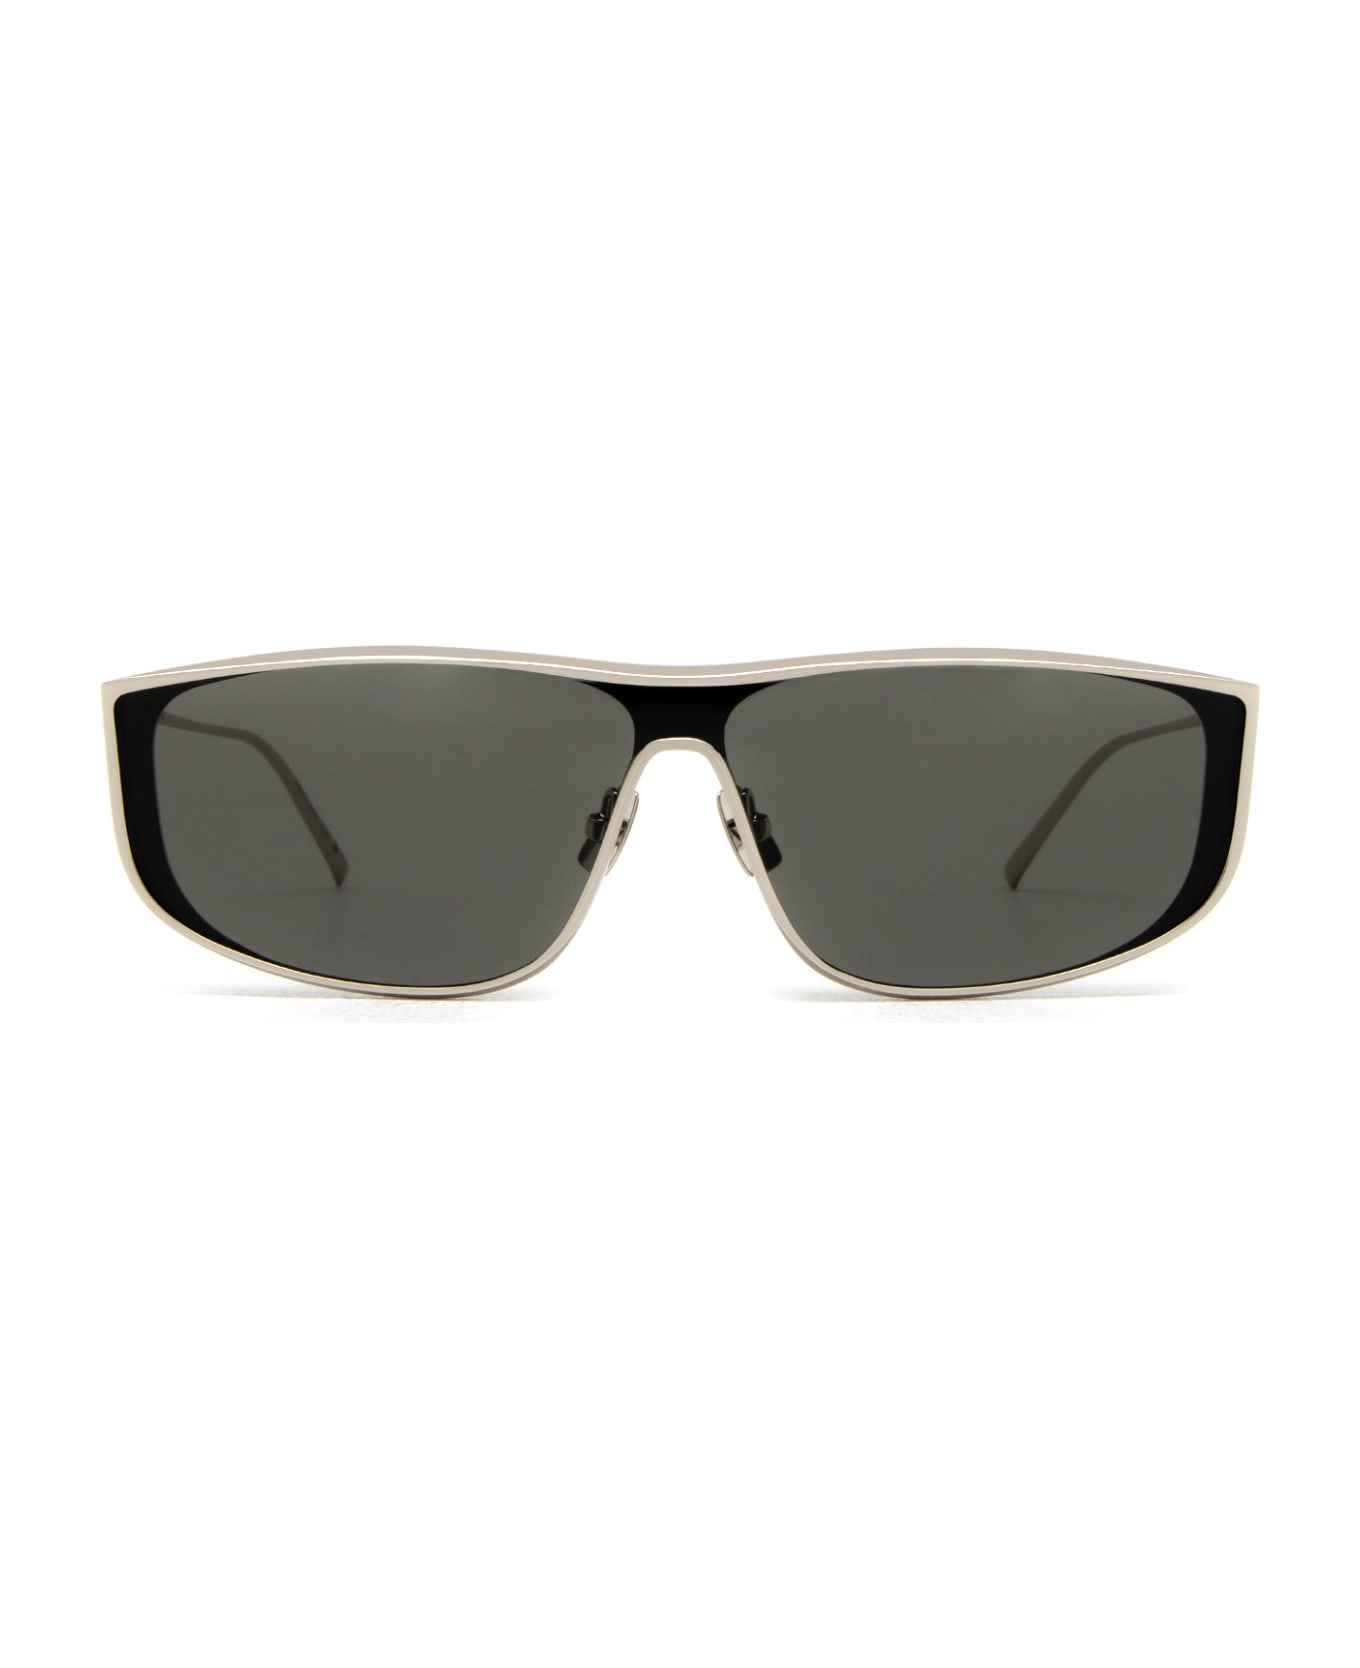 Saint Laurent Eyewear Sl 605 Silver Sunglasses - Silver